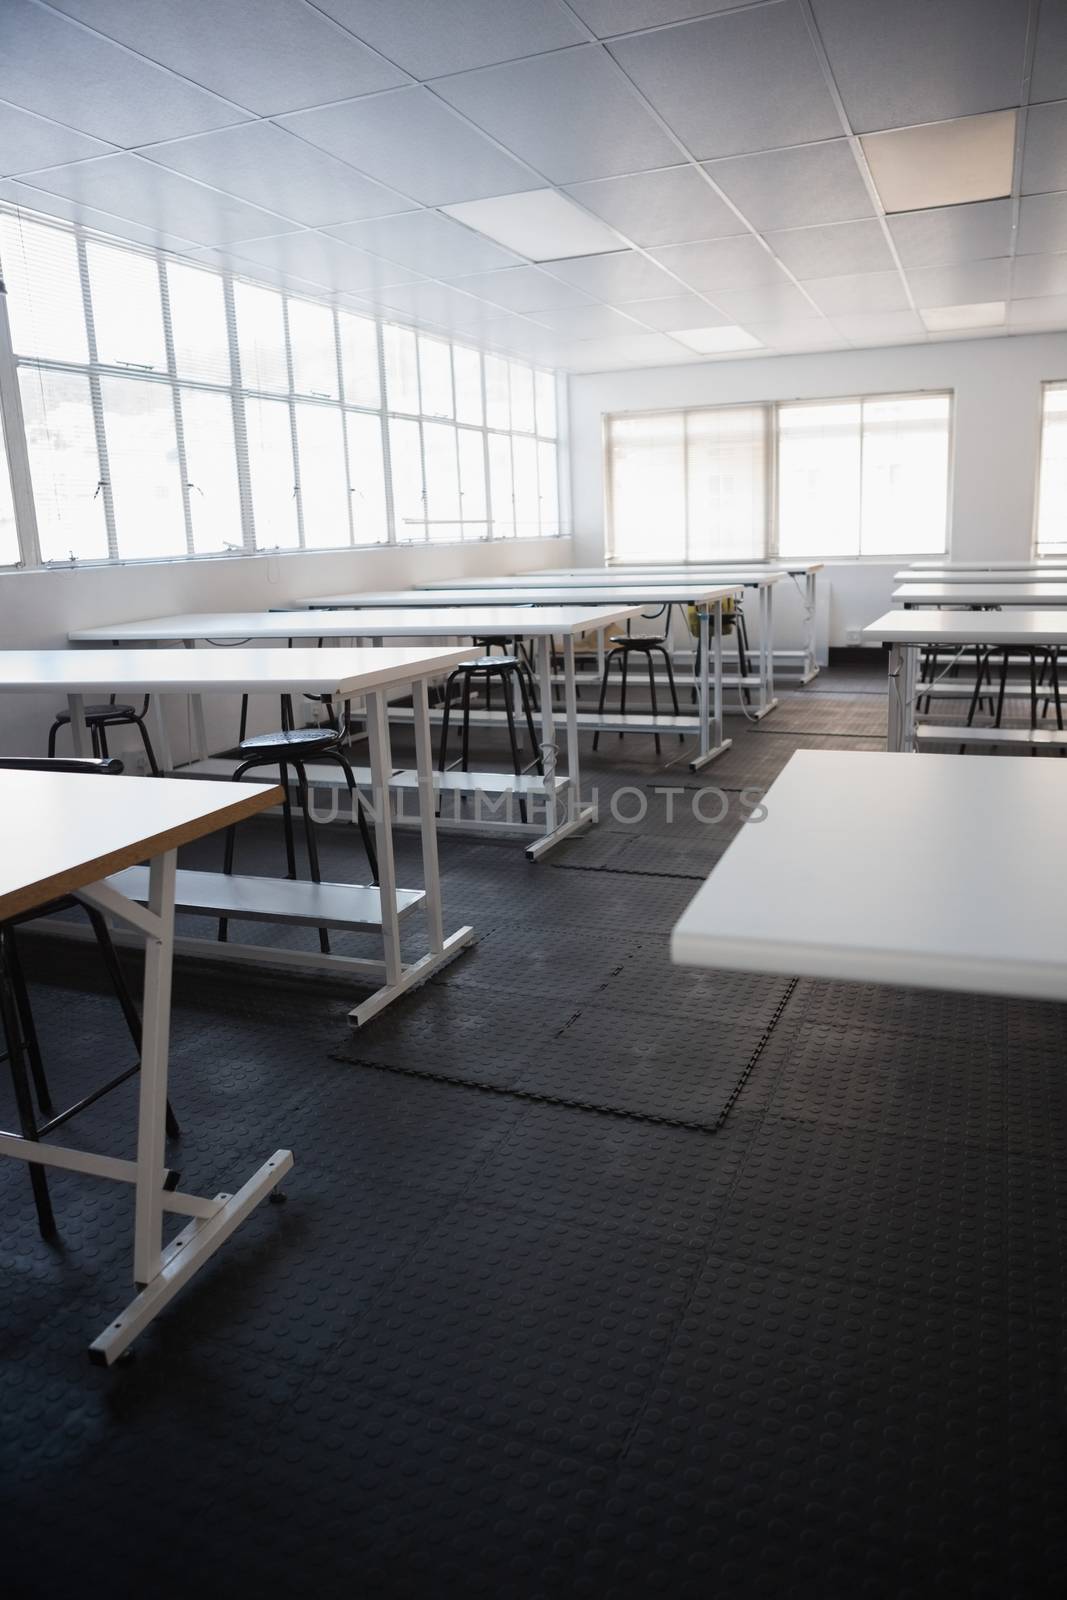 Empty class room in college